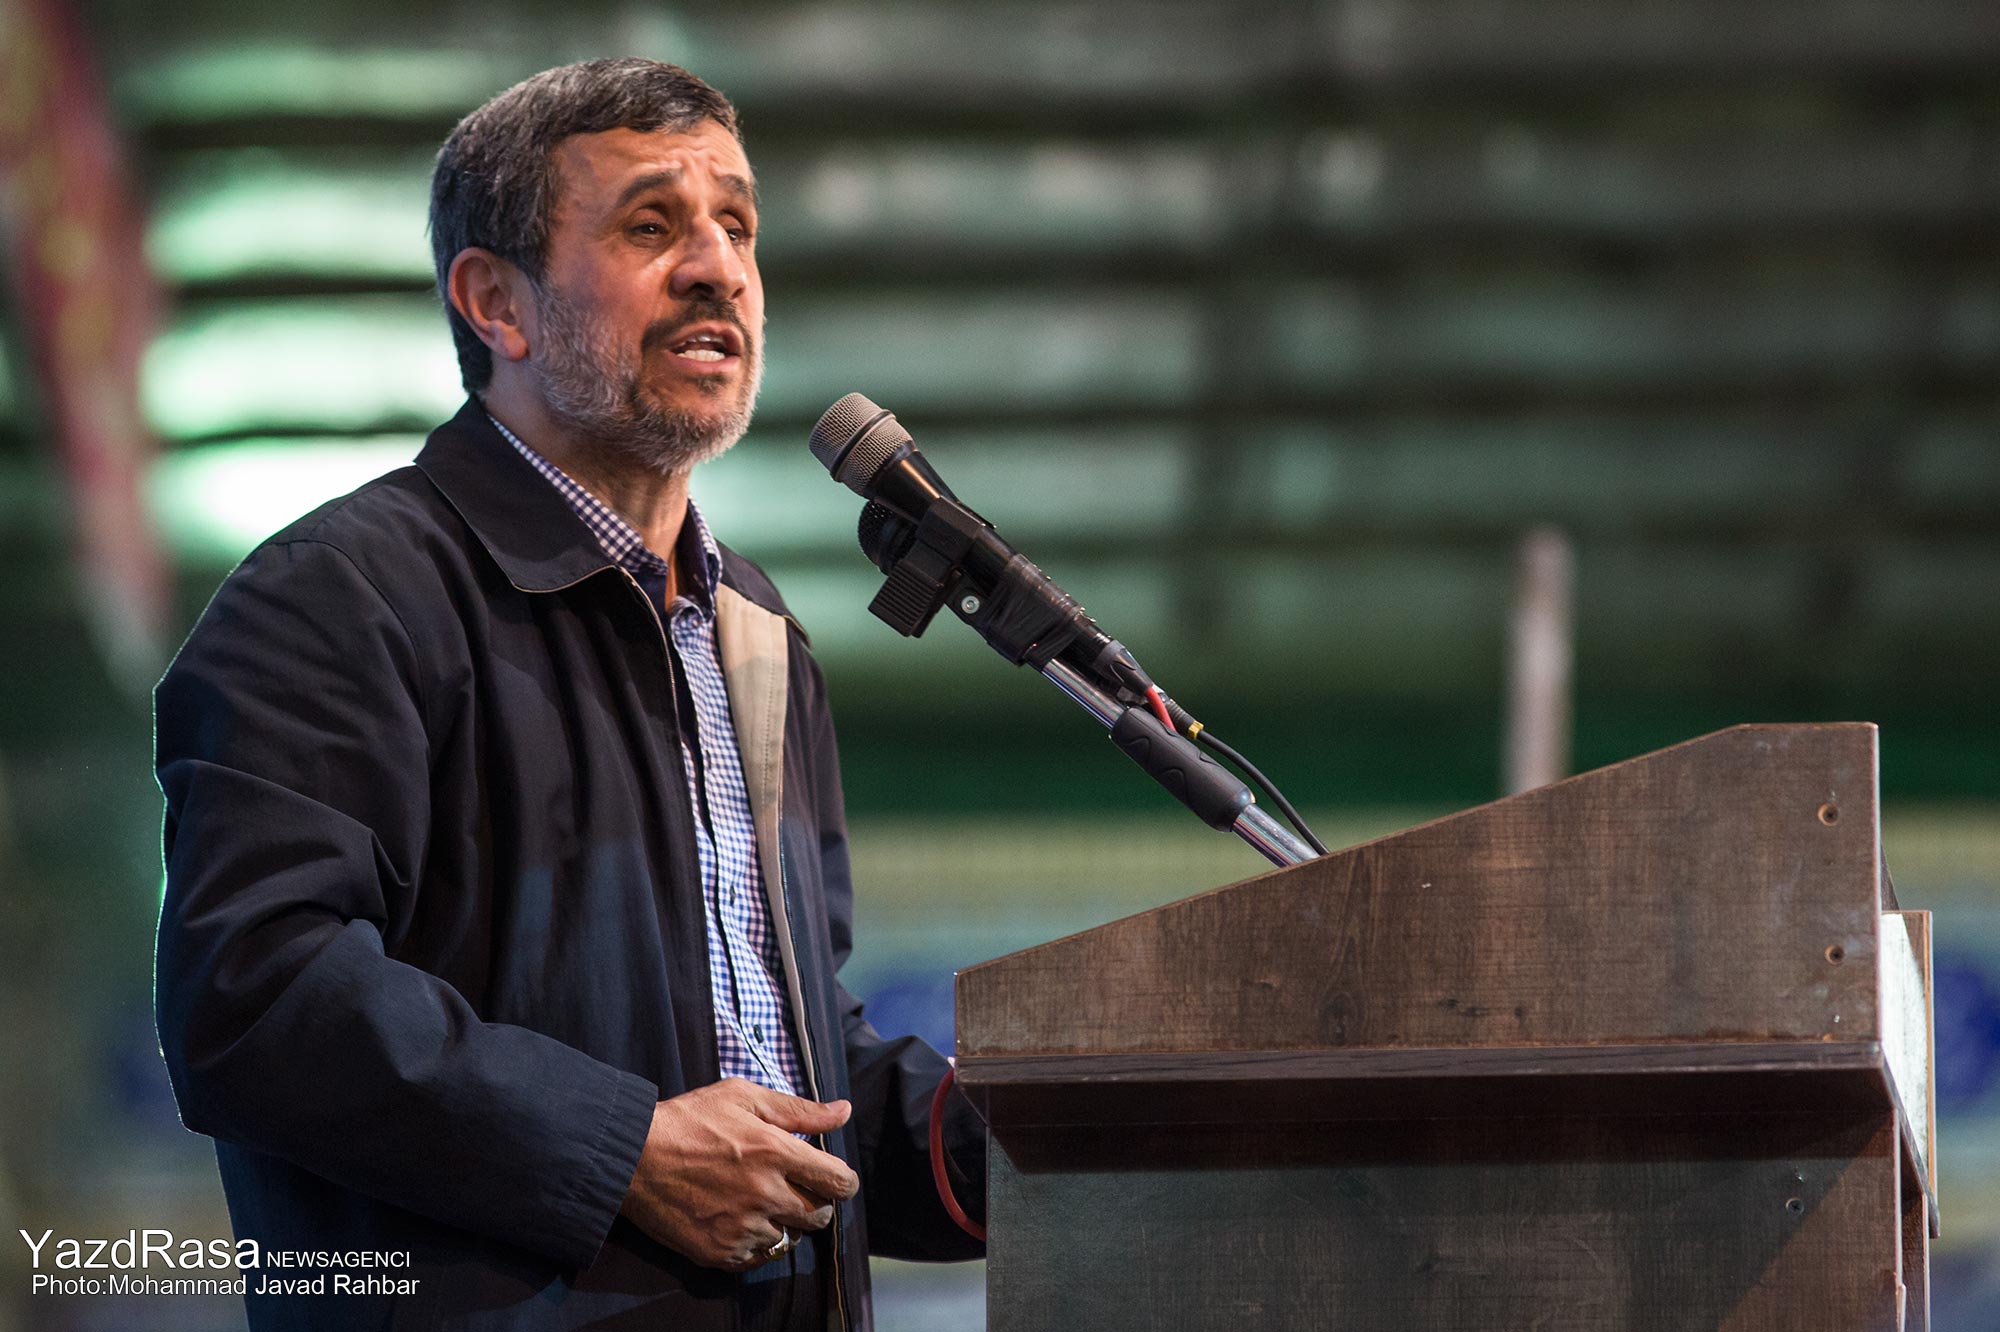 متن کامل سخنرانی احمدی‌نژاد در بافق +تصاویر